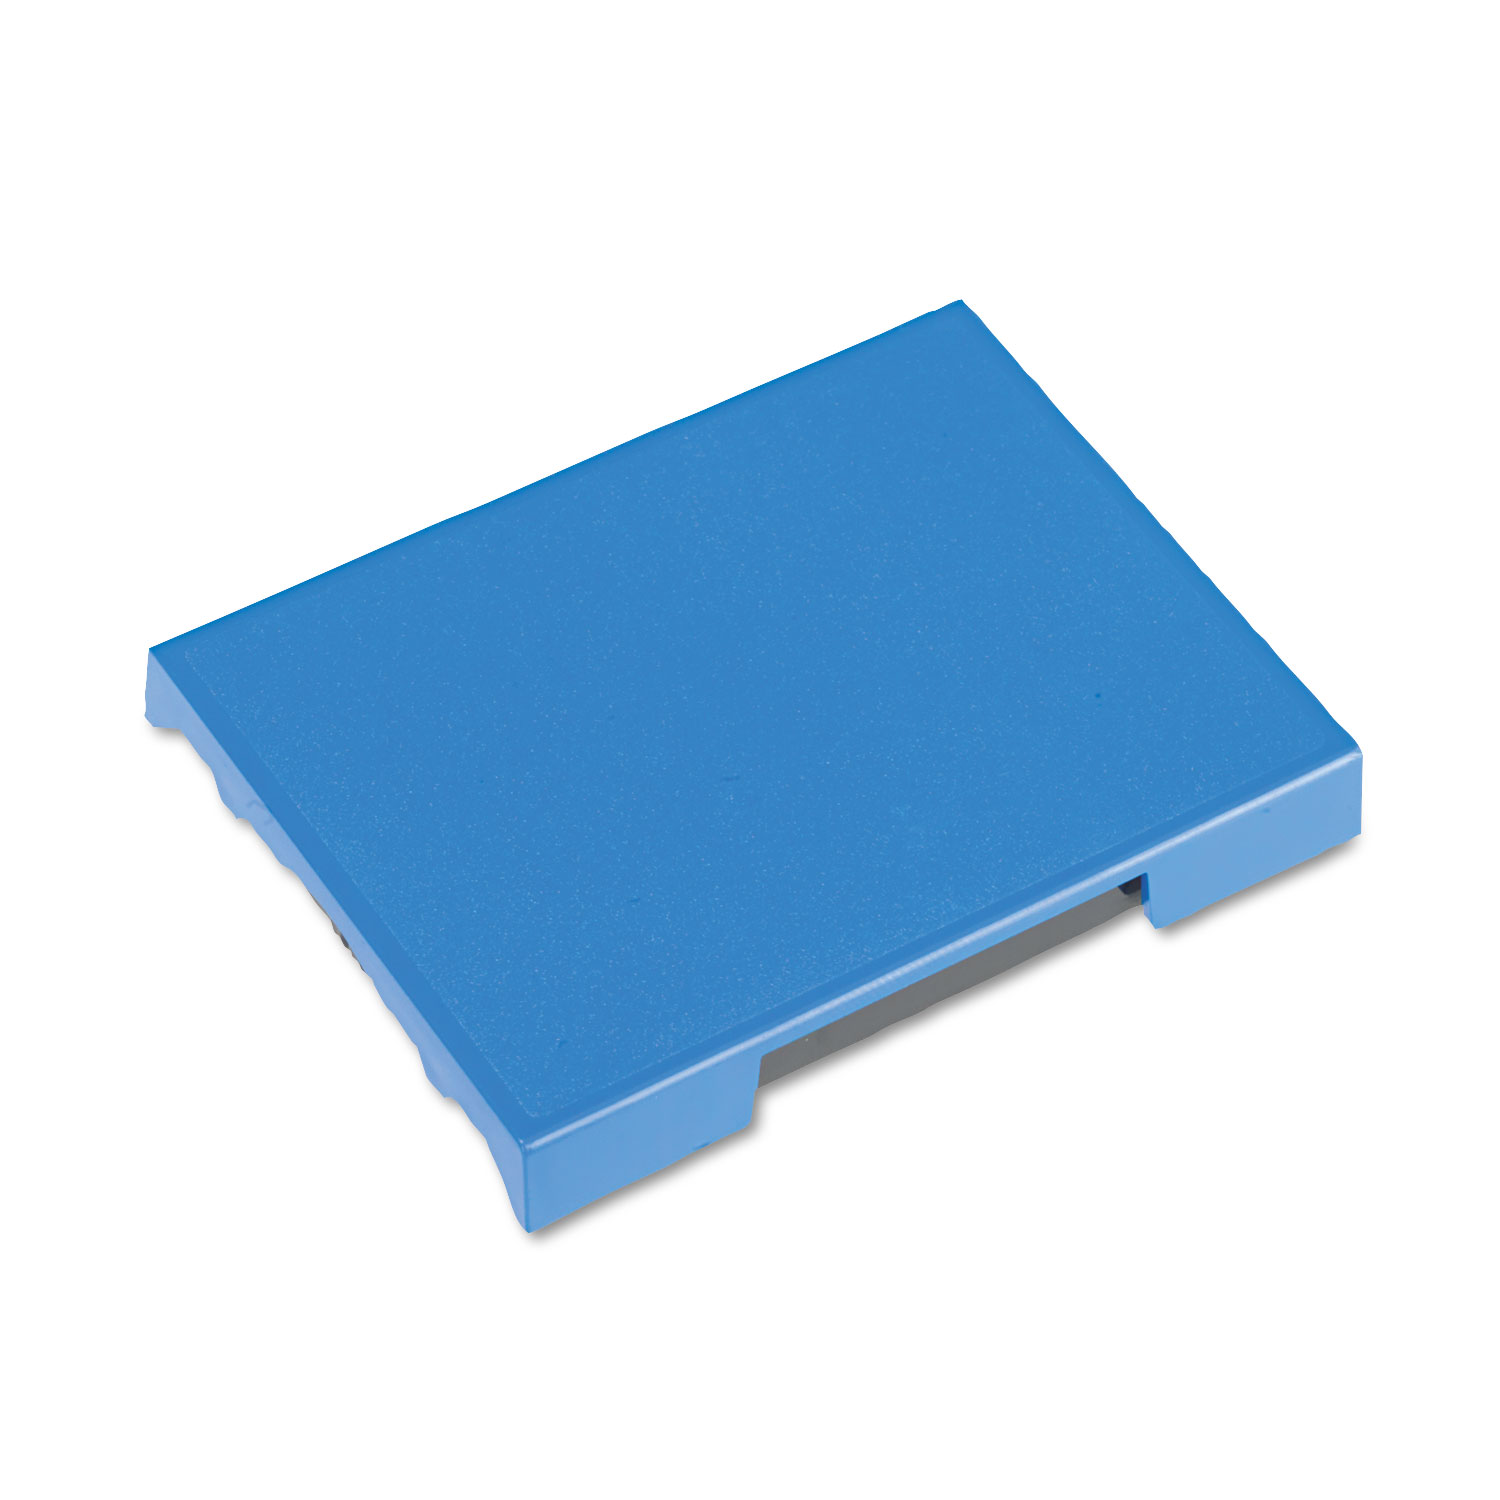 Trodat T4727 Dater Replacement Pad, 1 5/8 x 2 1/2, Blue